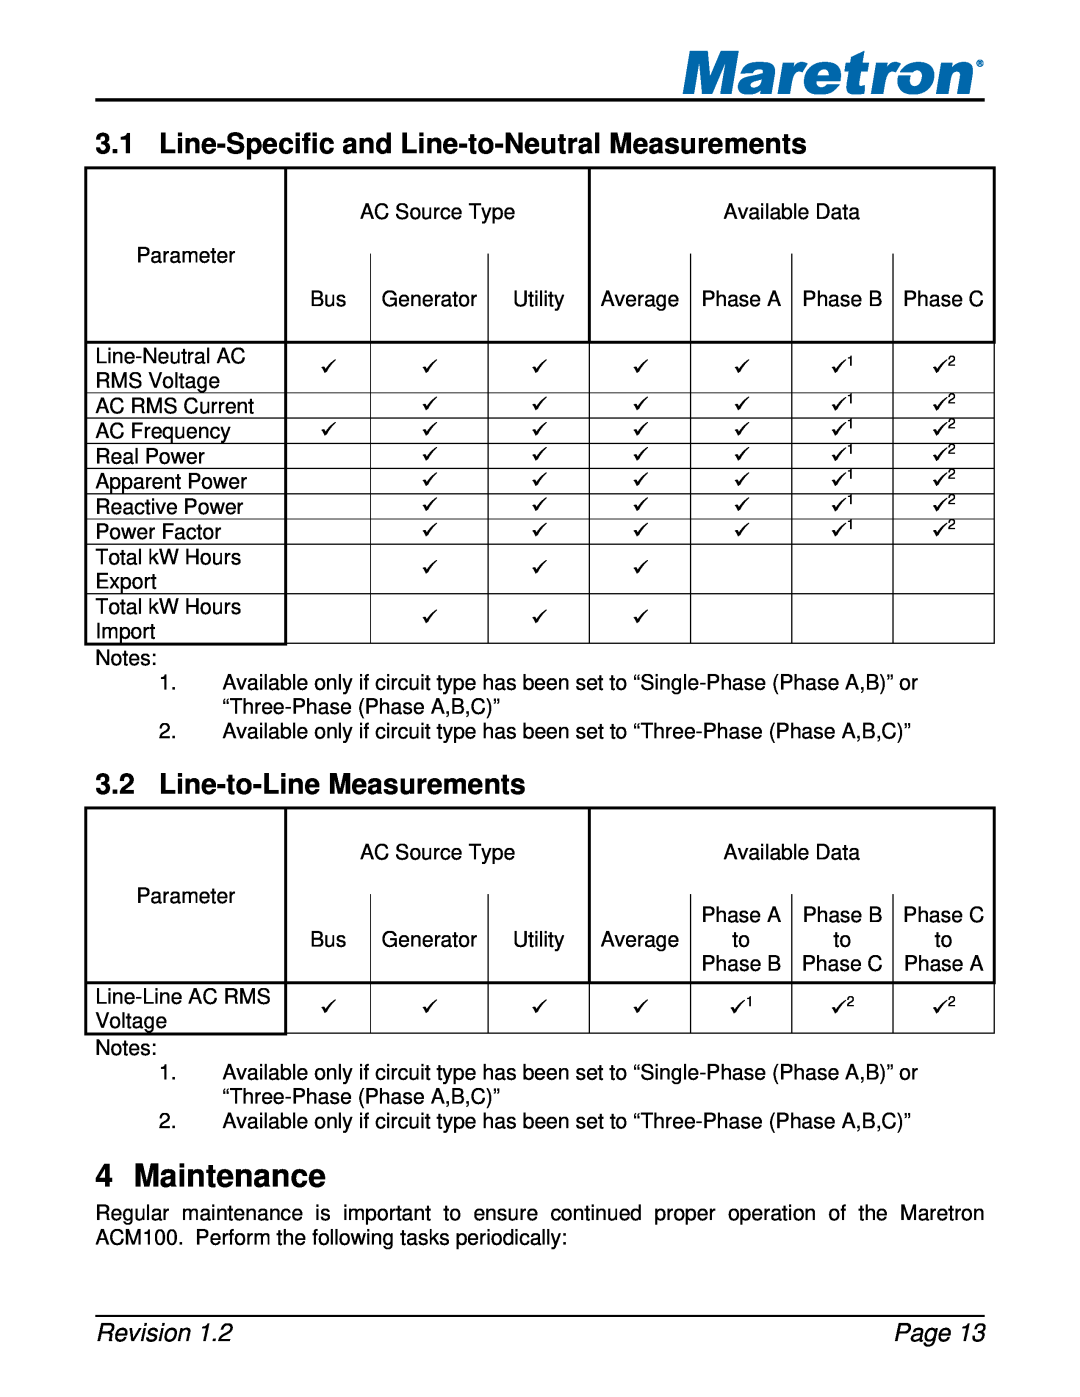 Maretron ACM100 Maintenance, Line-Specific and Line-to-Neutral Measurements, Line-to-Line Measurements, Revision, Page 